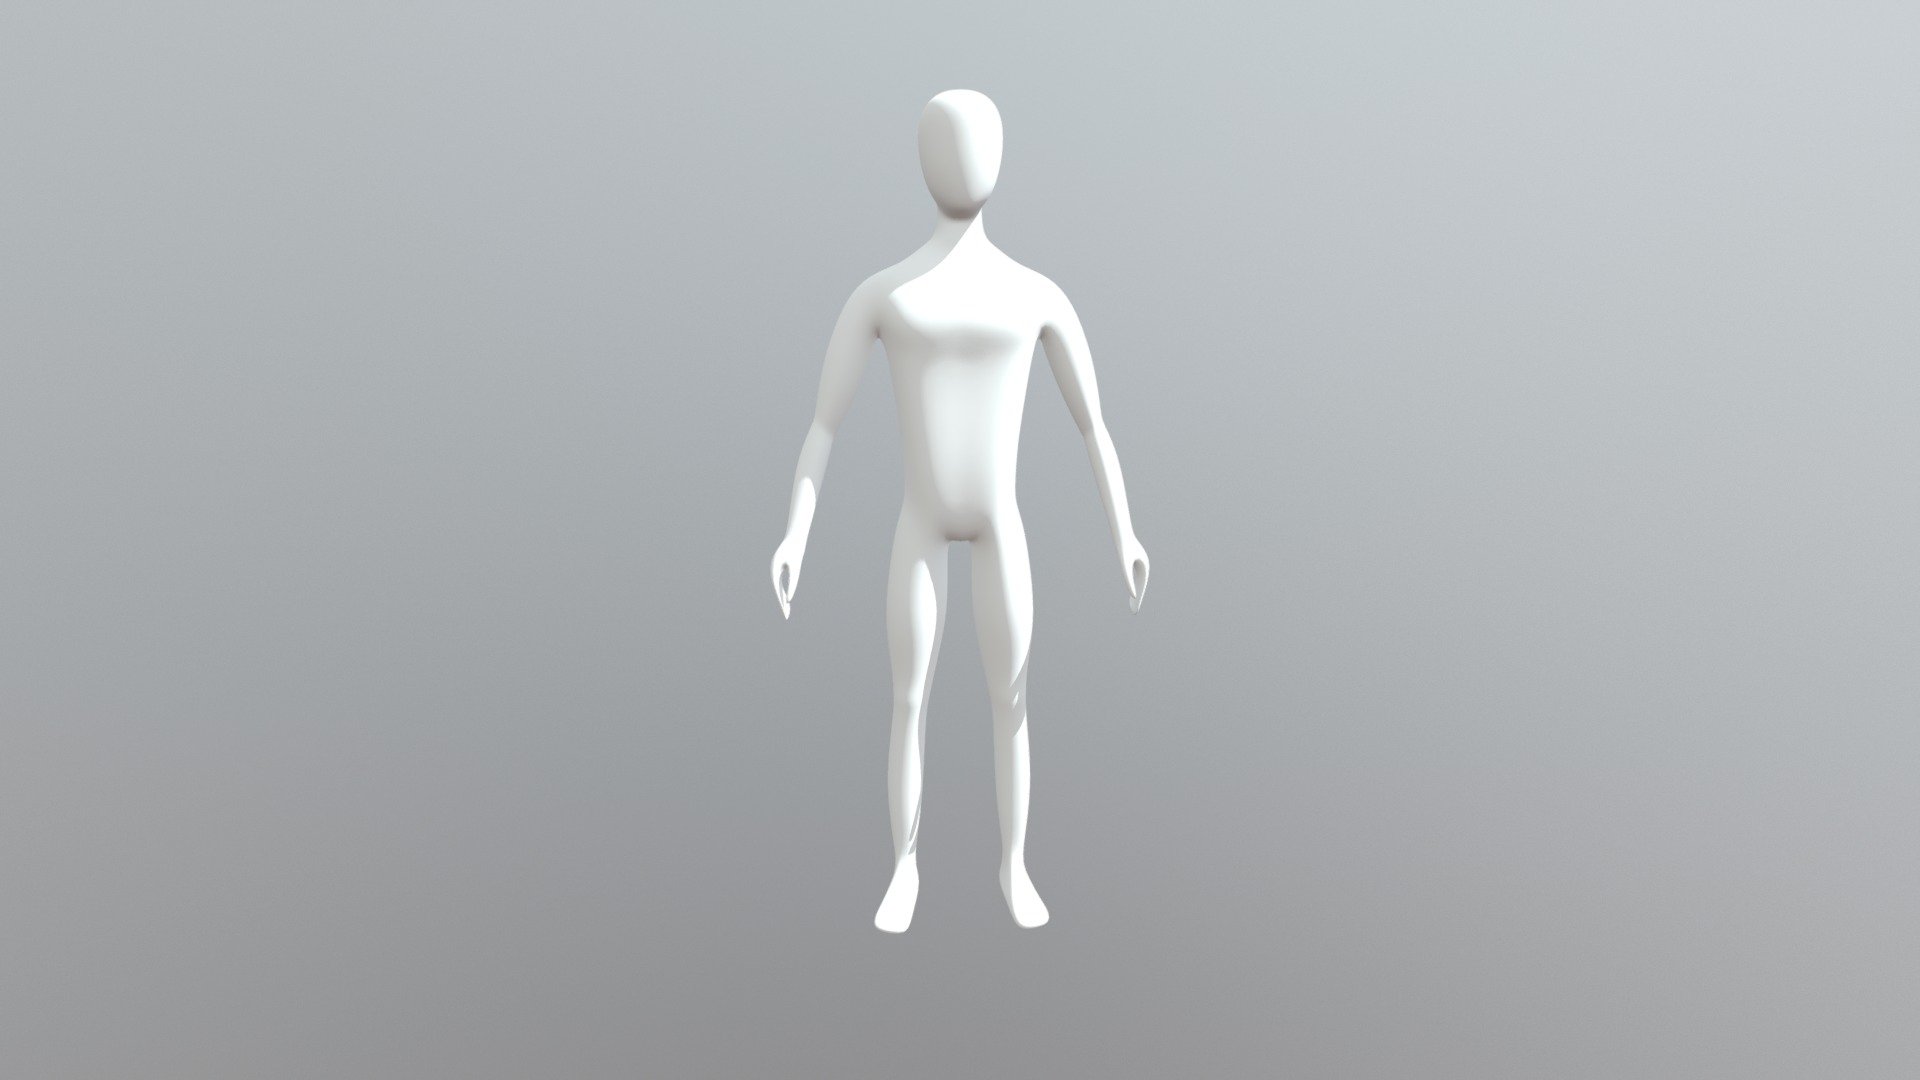 blender realistic human model download